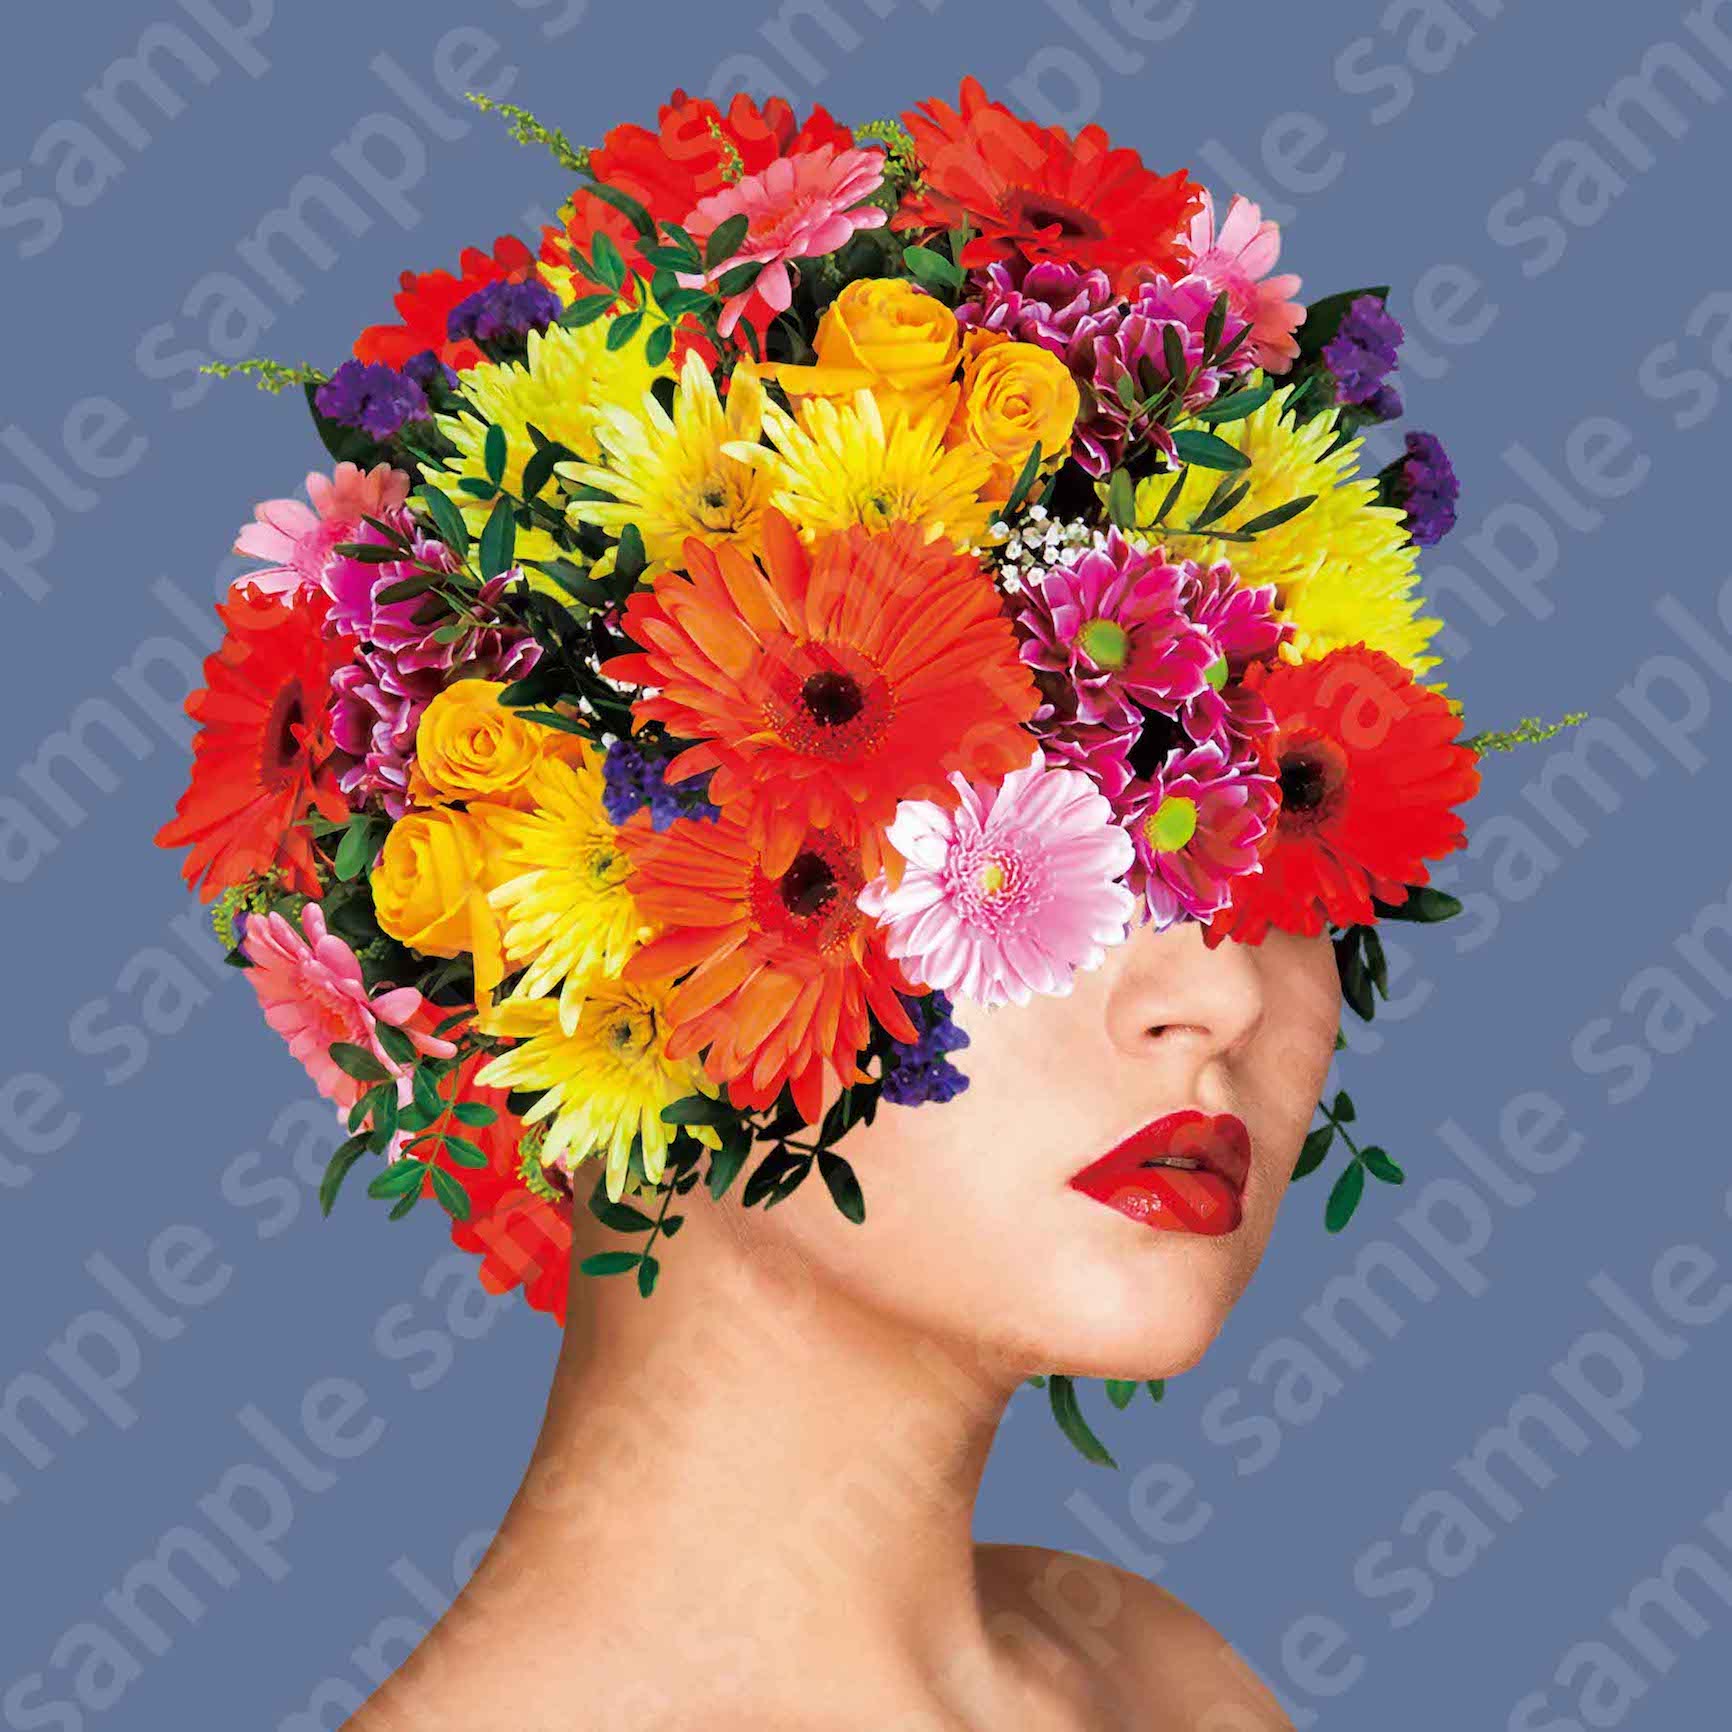 HEAD FULL OF FLOWERS - TOMARI MIYA ART PRINT ON CANVAS 40"x40"